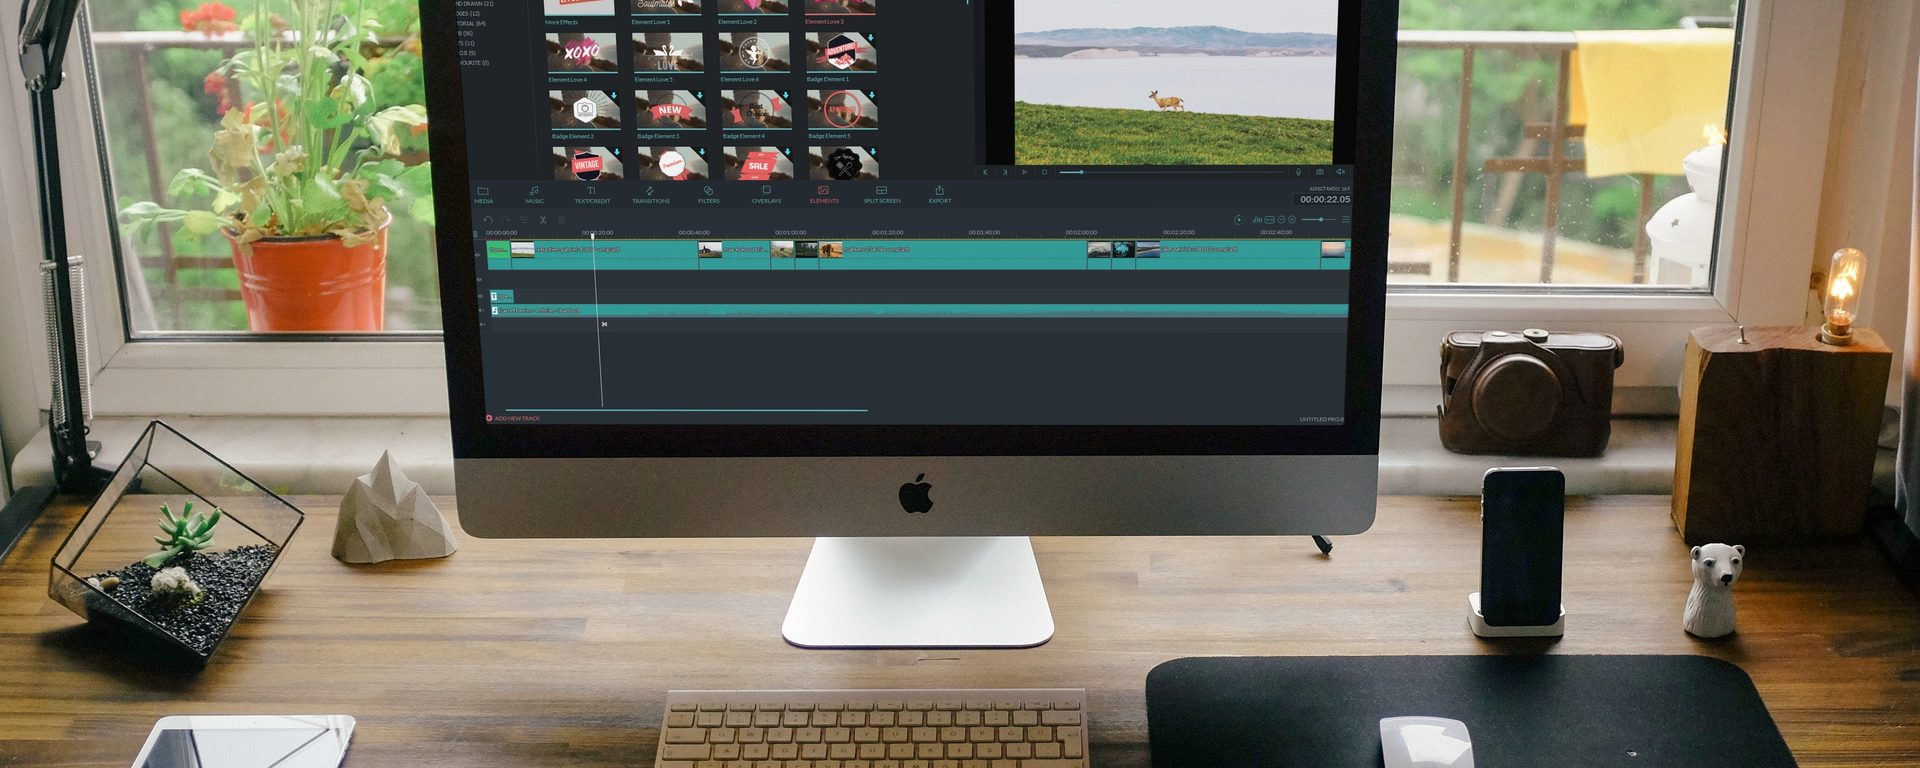 download filmora video editor for mac